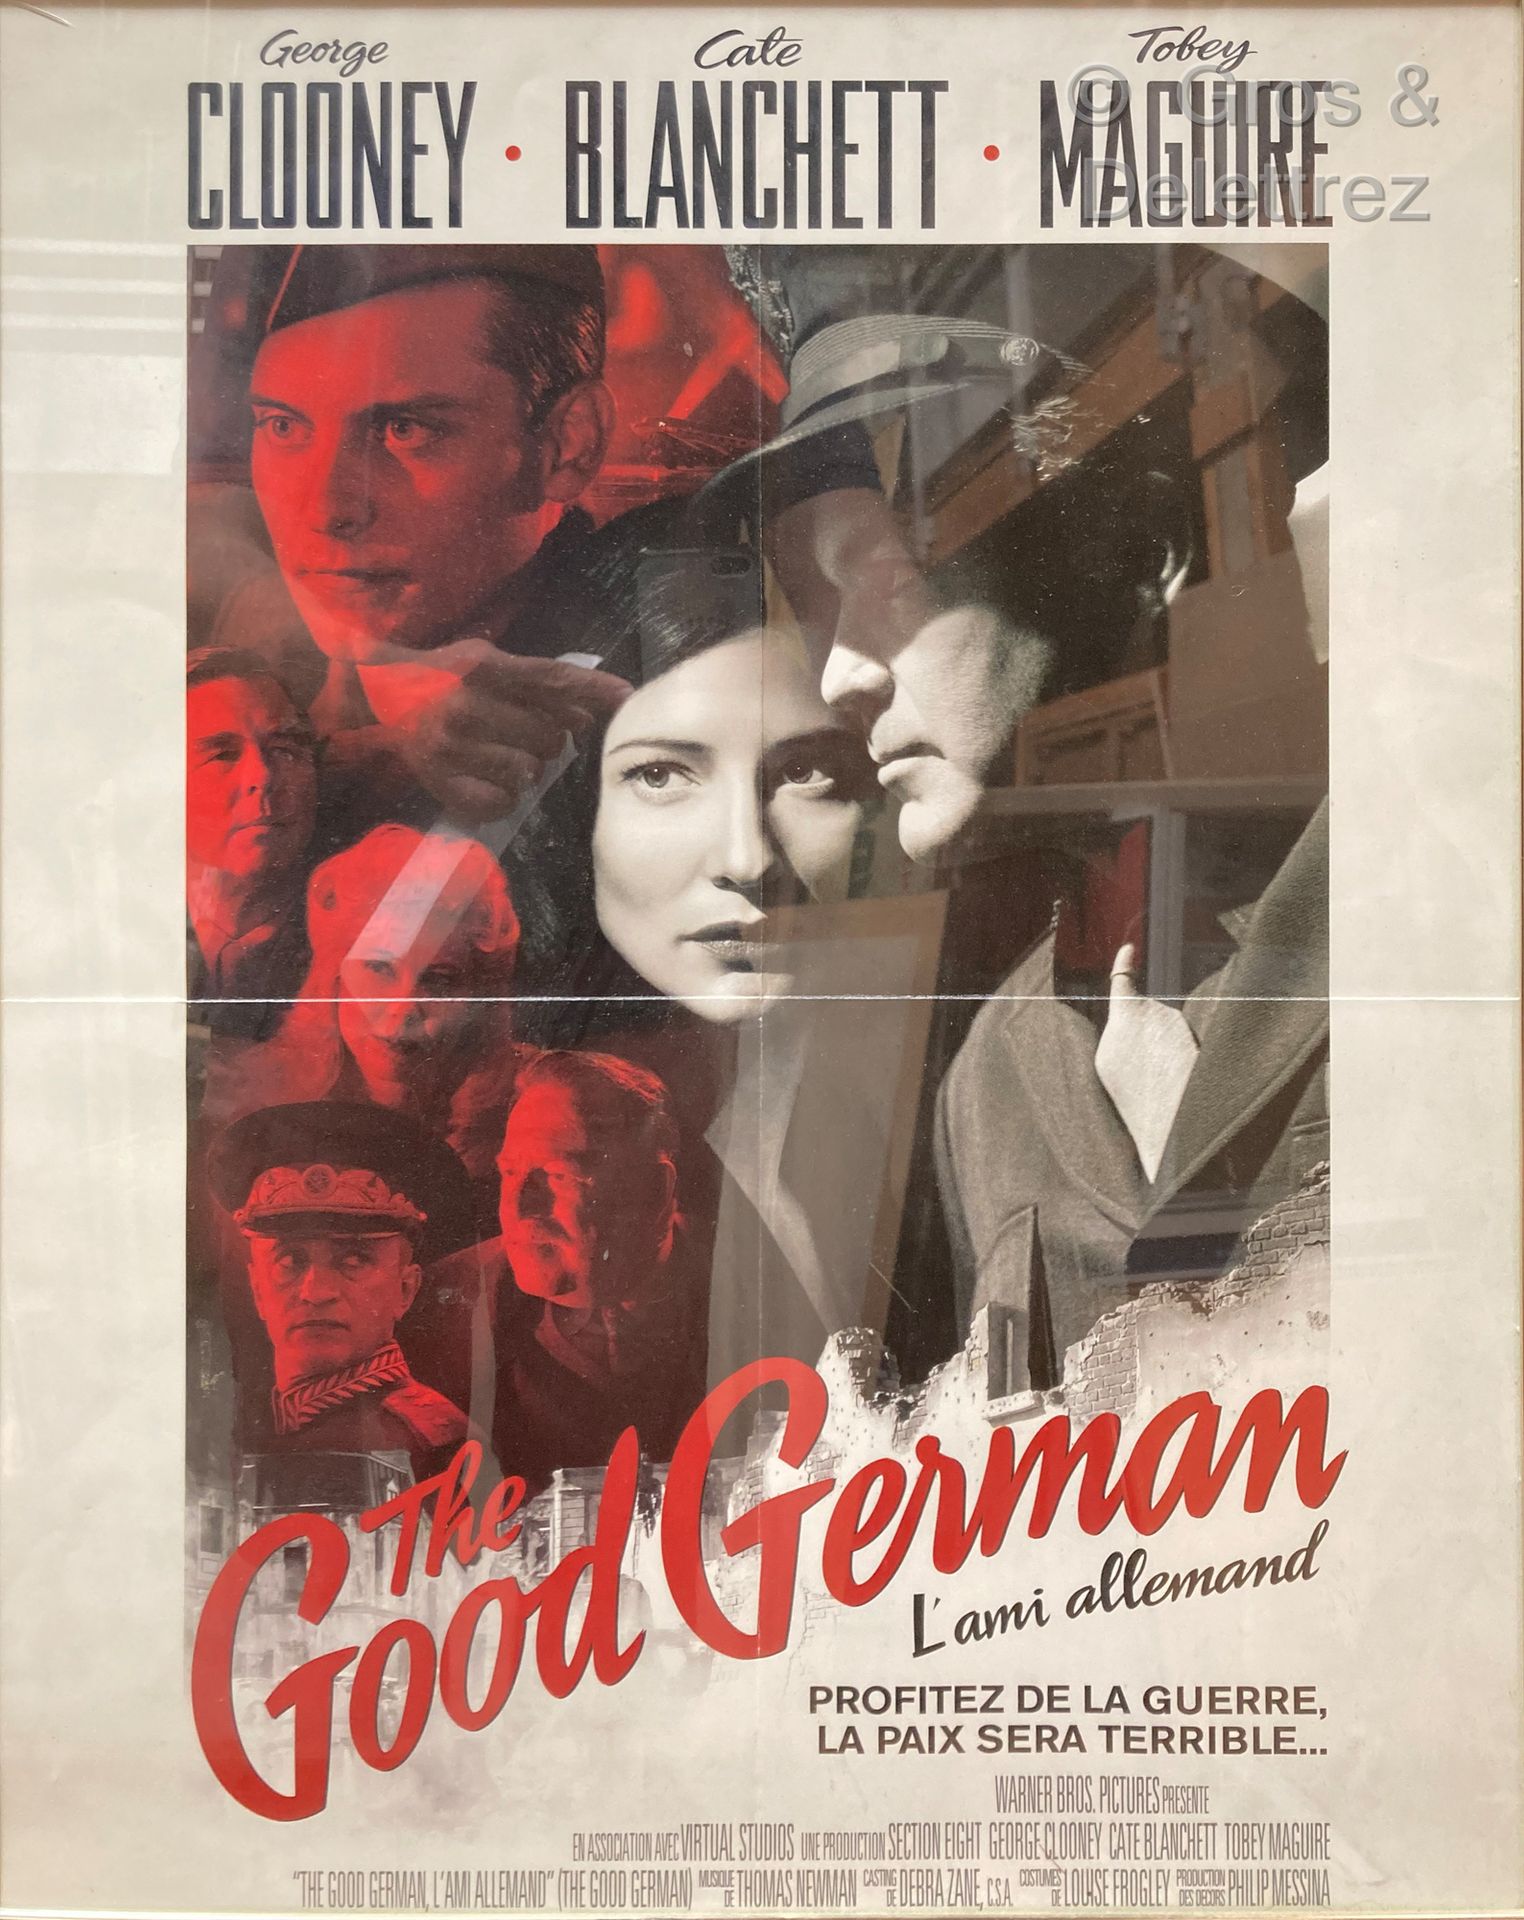 Null THE GOOD GERMAN con George Clooney

Locandina del film

49 x 39 cm